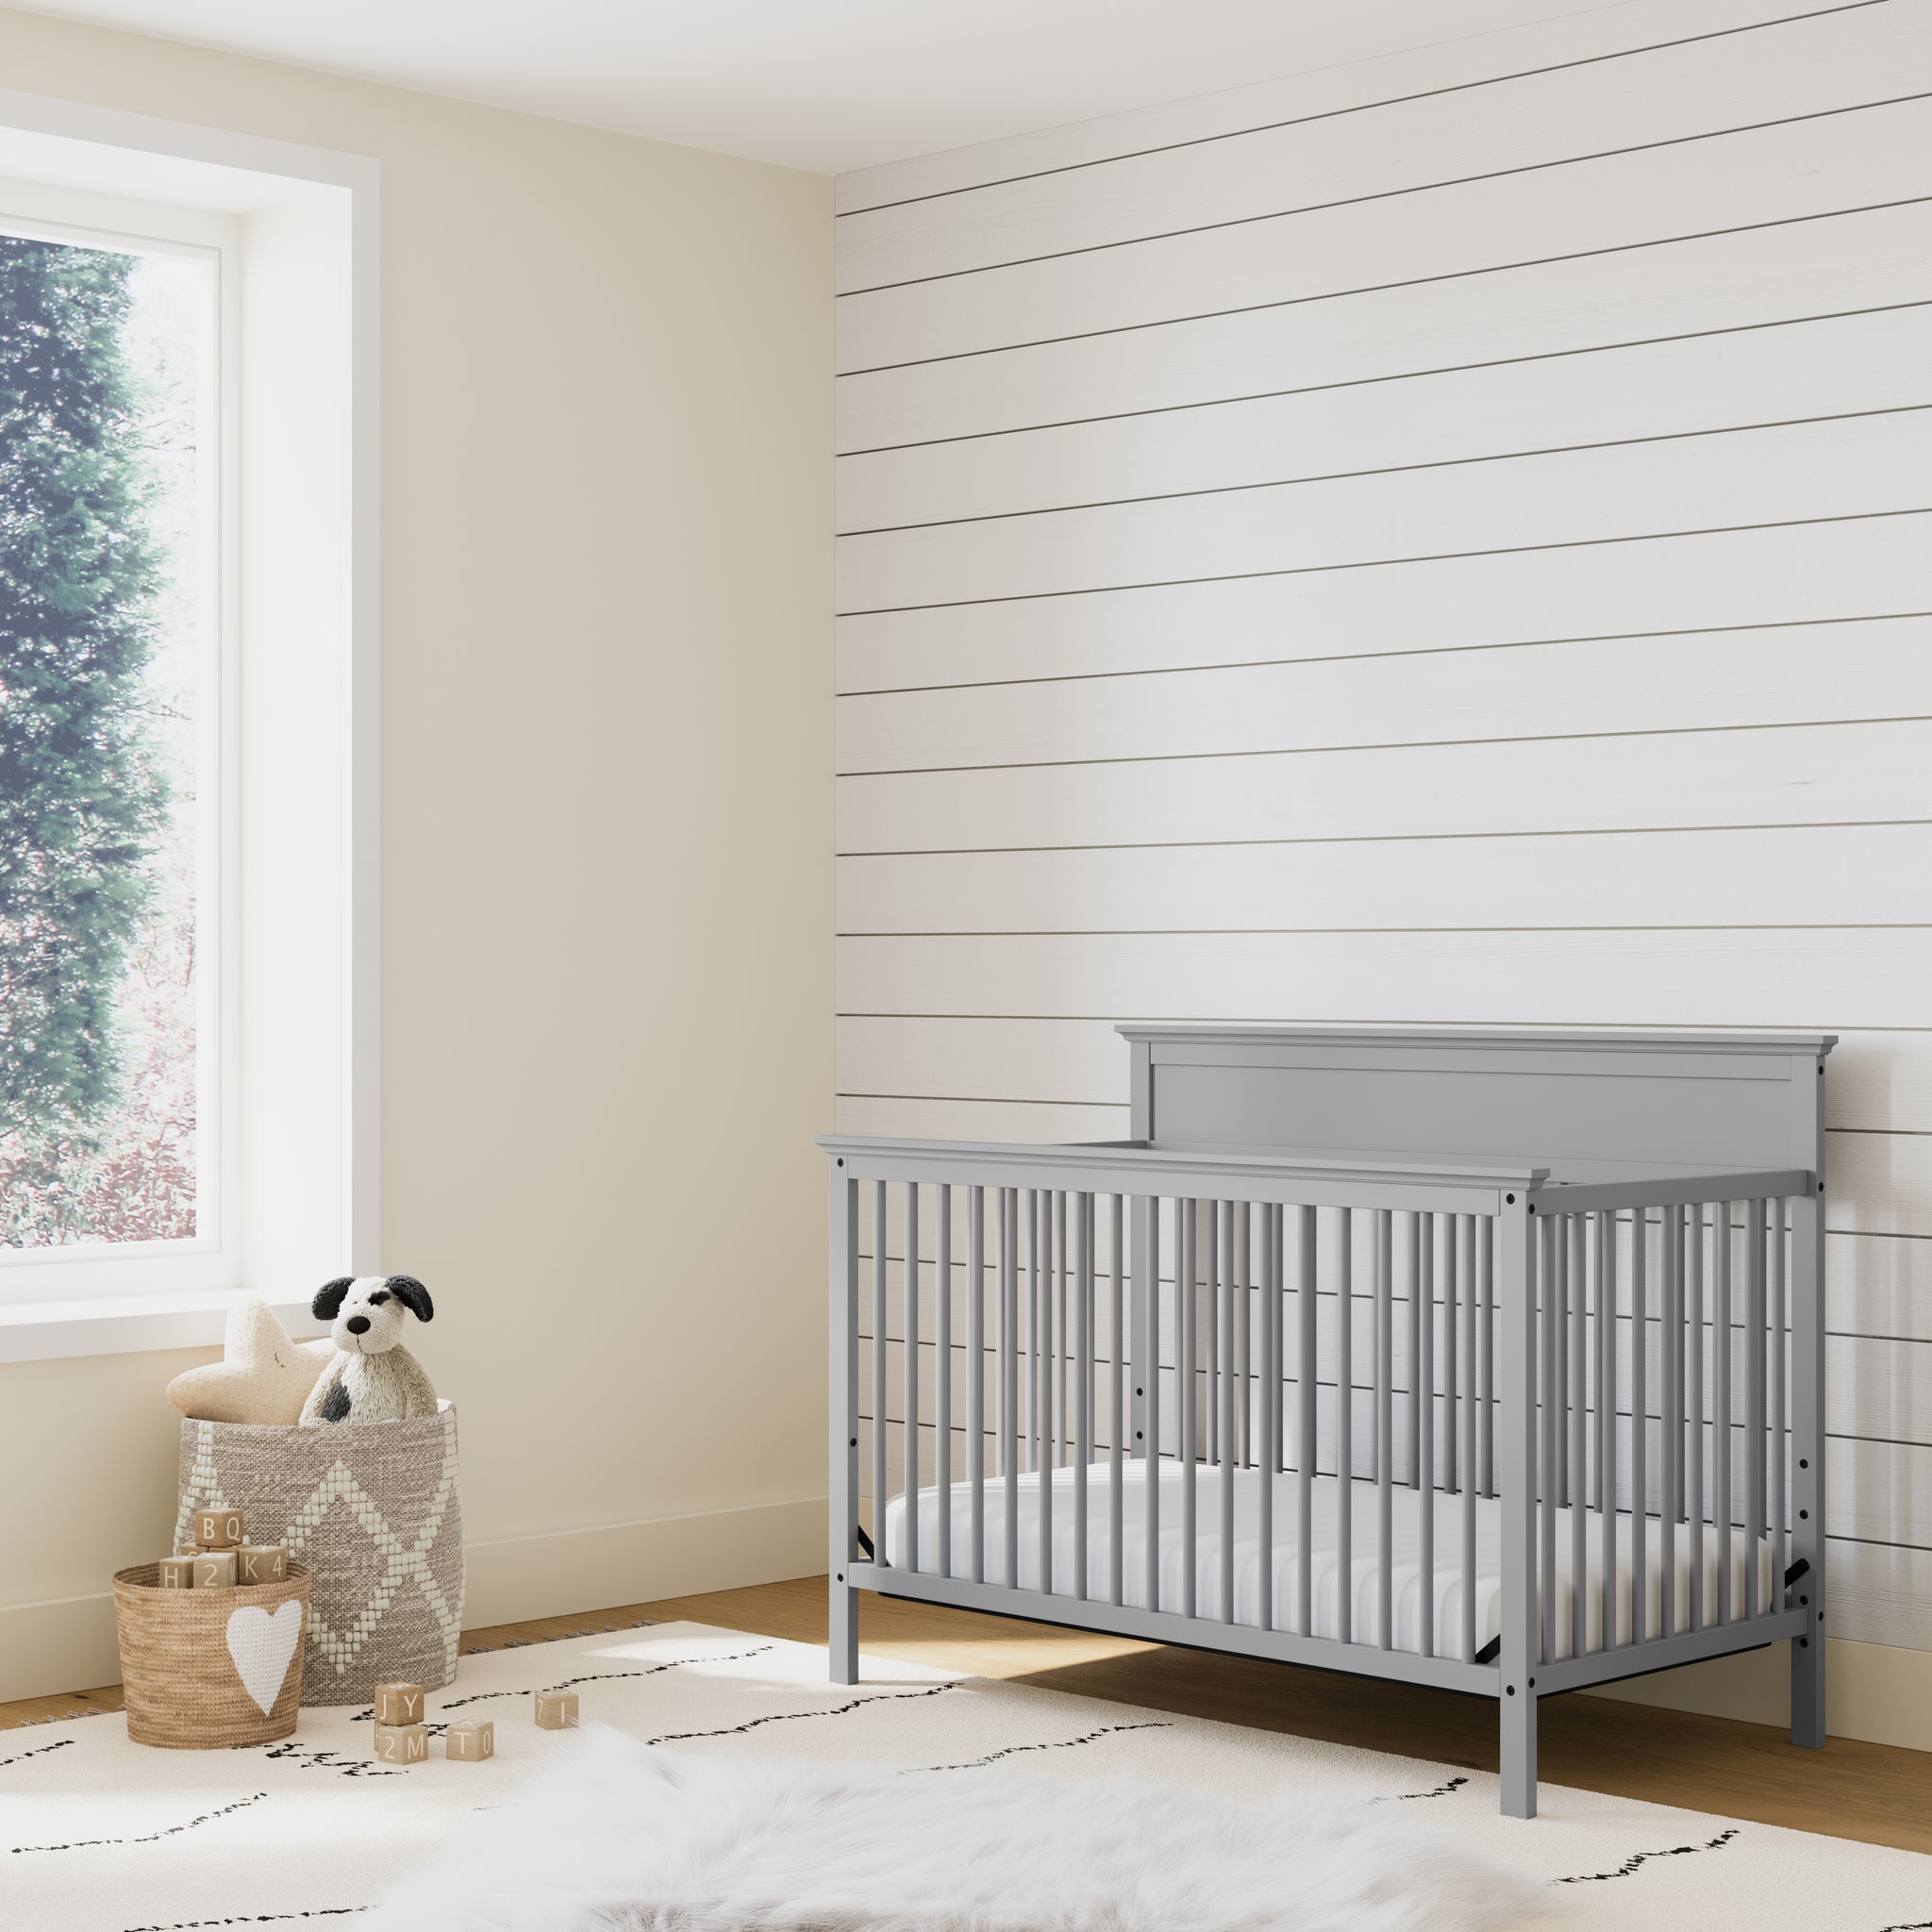 Pebble gray crib in nursery